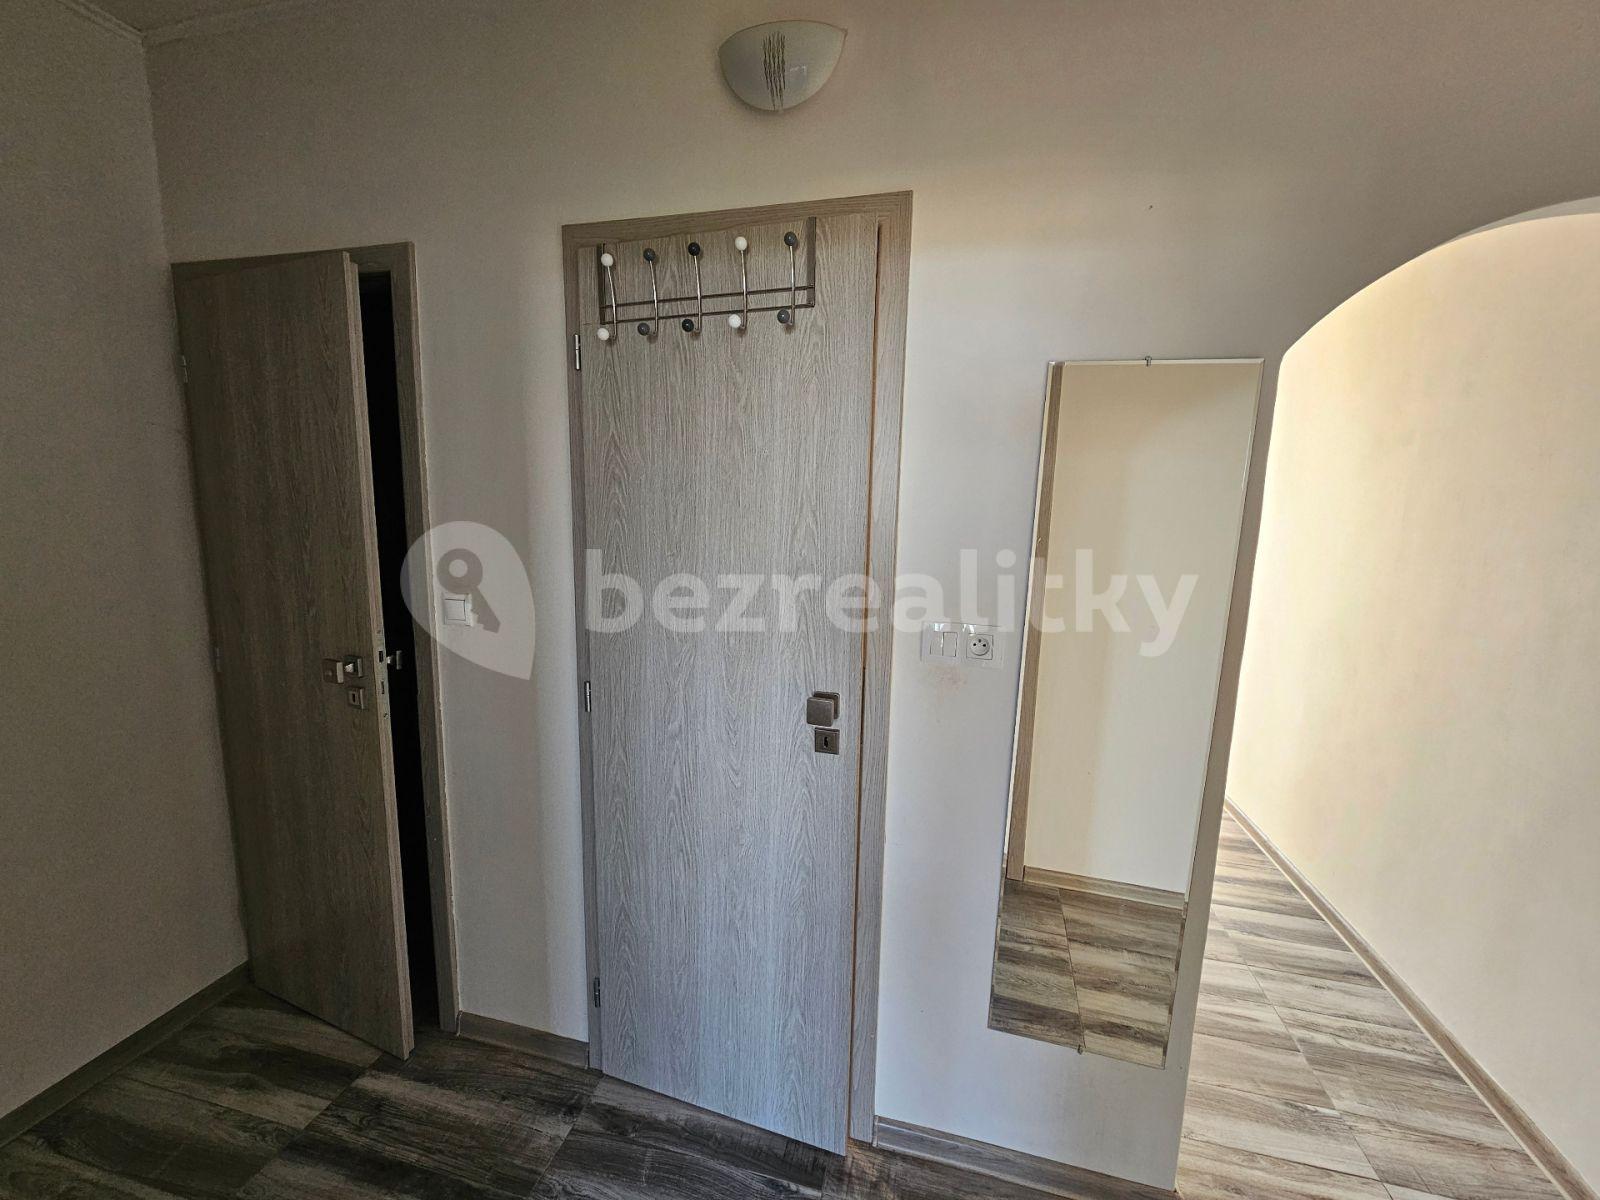 Predaj bytu 2-izbový 53 m², Dobšinského, Ivanka pri Dunaji, Bratislavský kraj